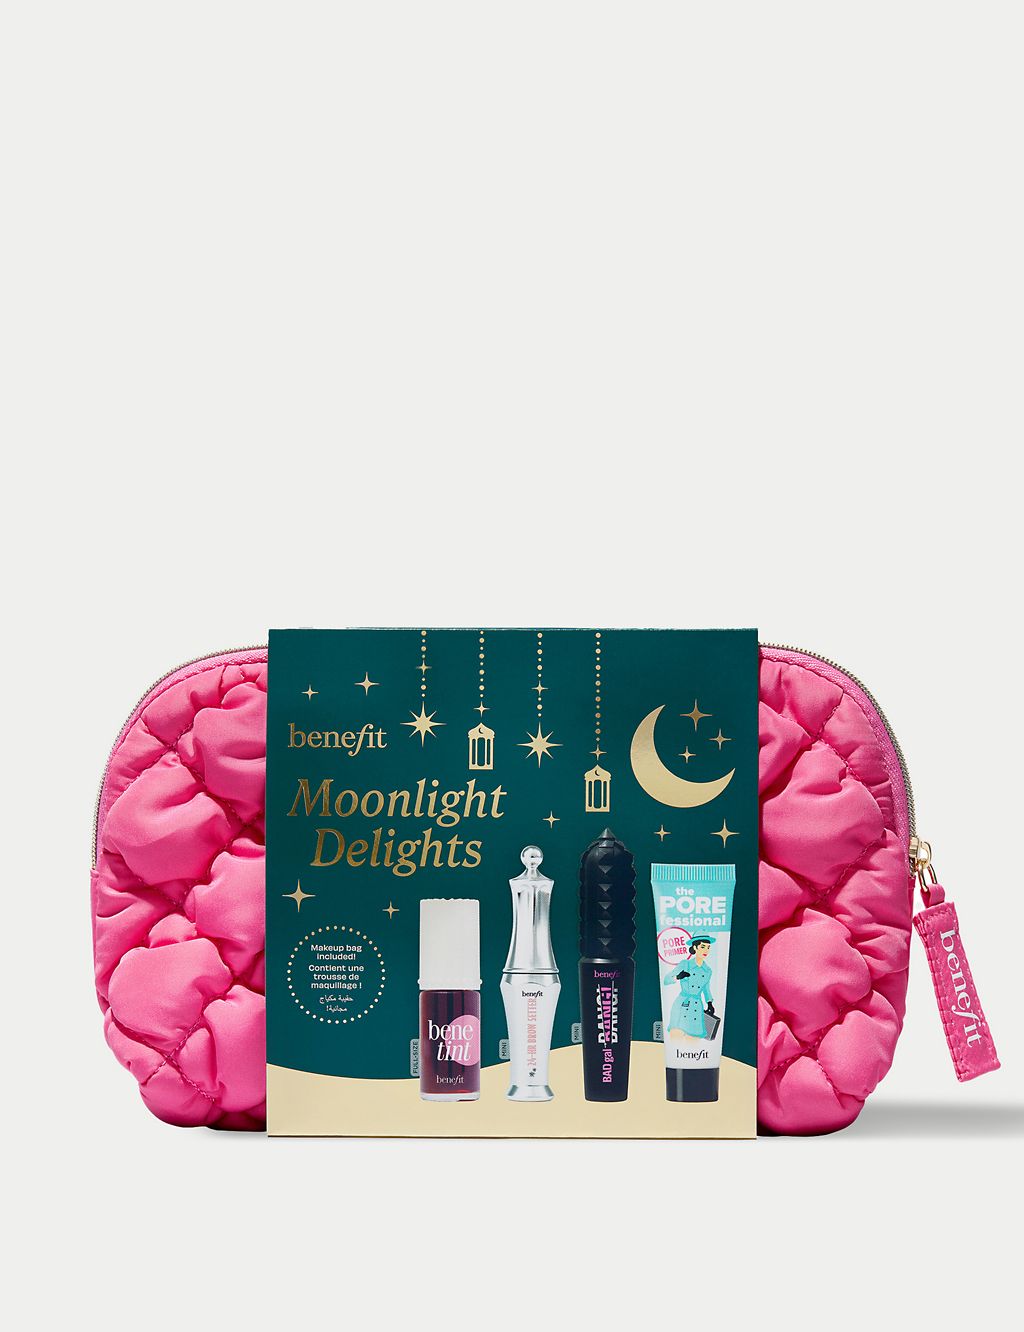 Moonlight Delights Benetint, 24hr Brow Setter, BadGal Bang and Porefessional Gift Set worth £67 21ml 3 of 6